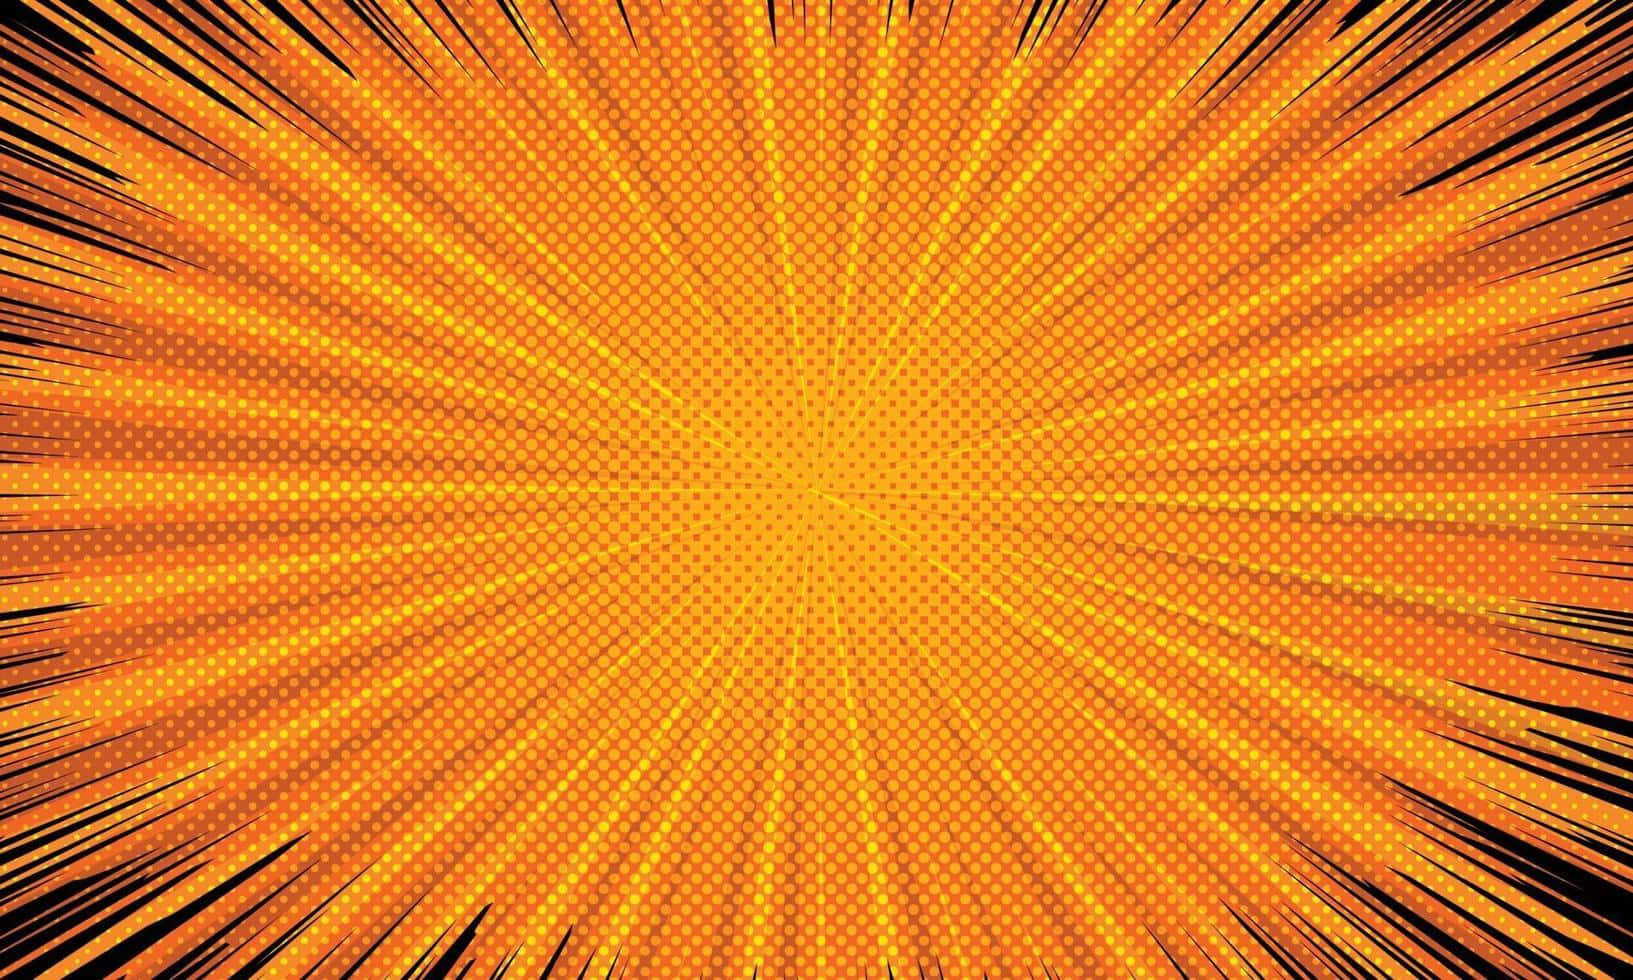 A Comic Sunburst Background With Orange And Black Lines